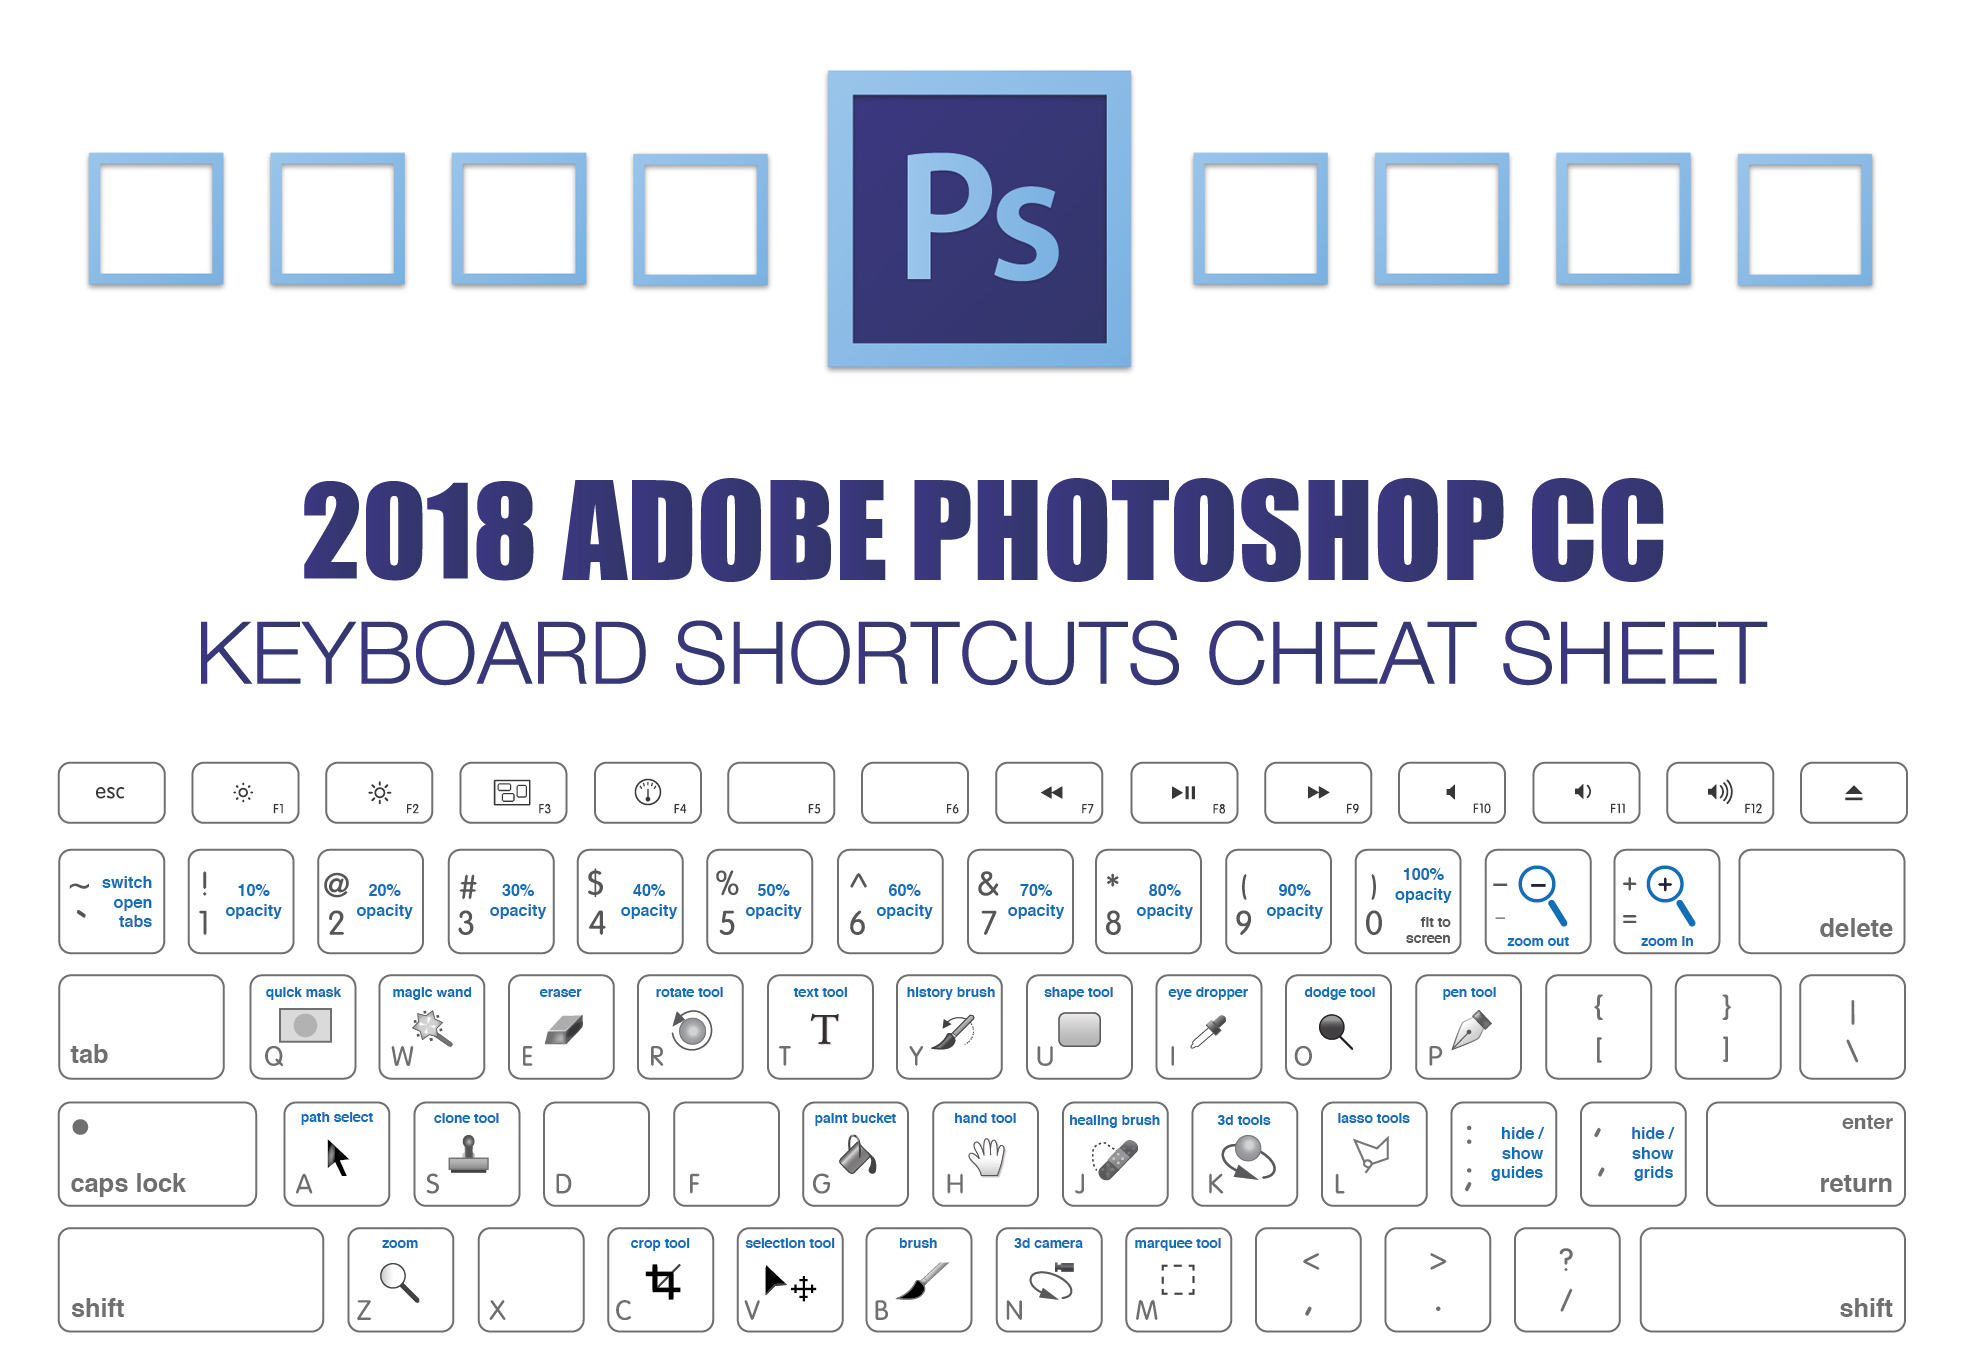 Windows keyboard shortcuts cheat sheet pdf